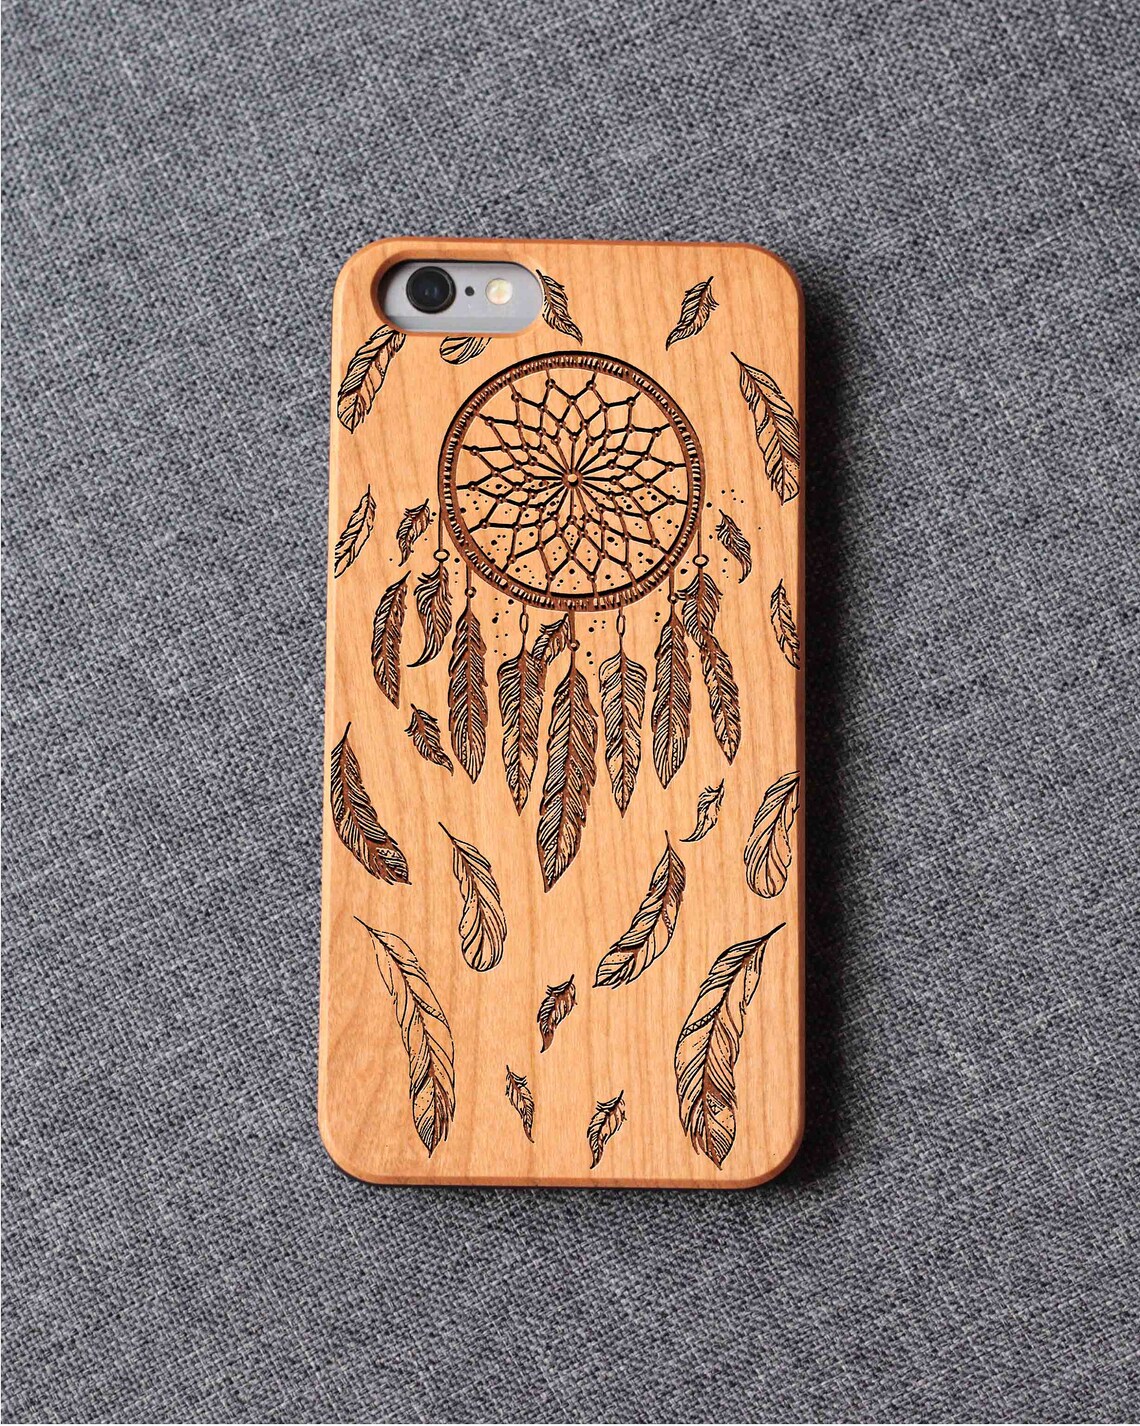 Dream catcher iPhone case for 13 mini 11 X wood iphone case iPhone 12 wood case iPhone 13 pro max, iphone 12 case